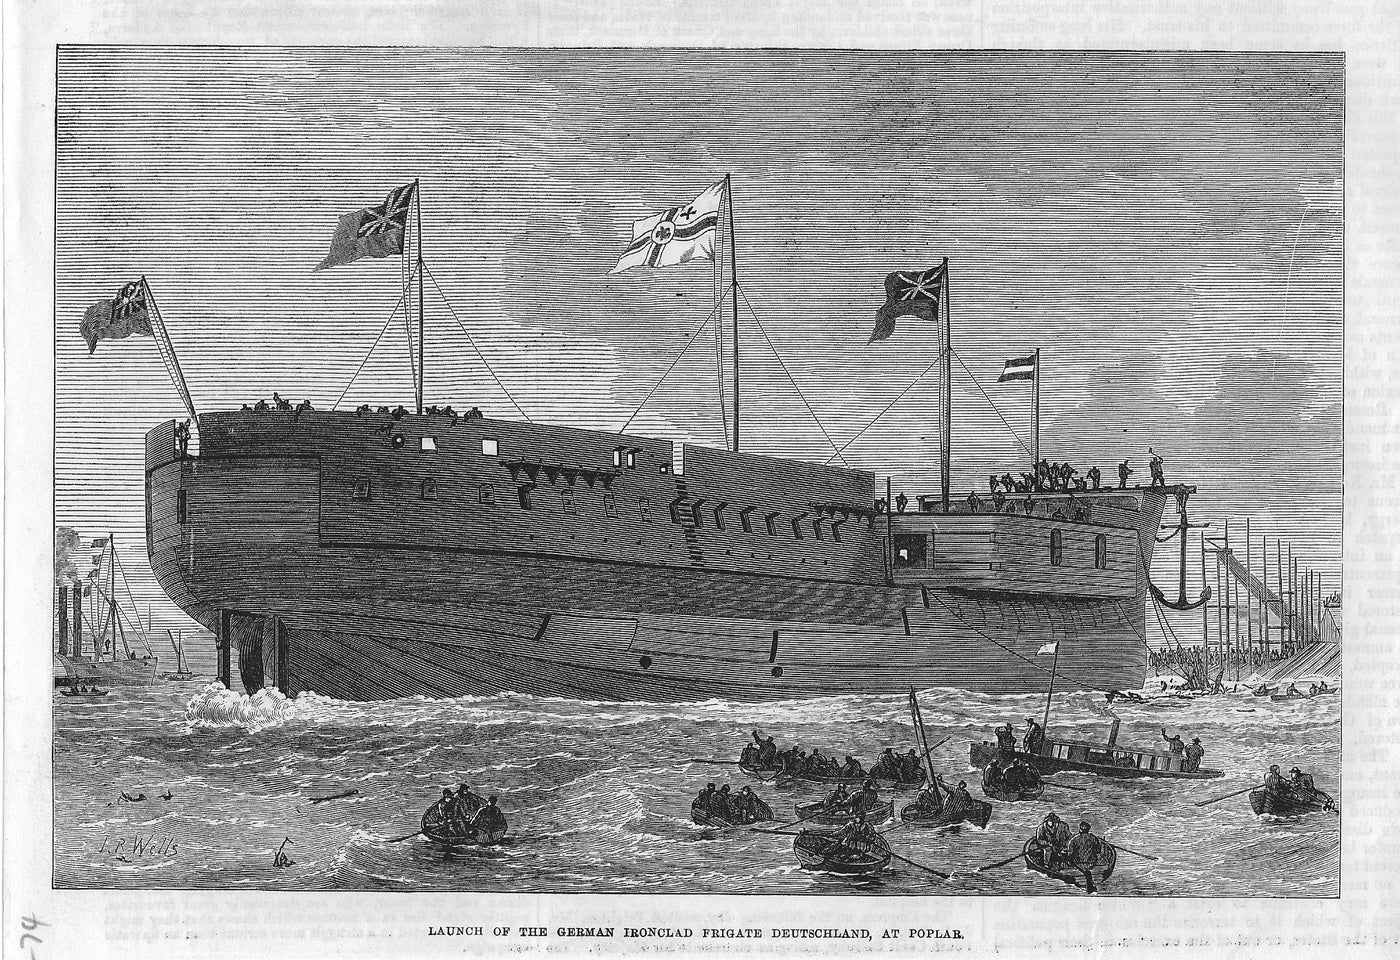 Deutchland ironclad frigate launched at Poplar antique print 1874